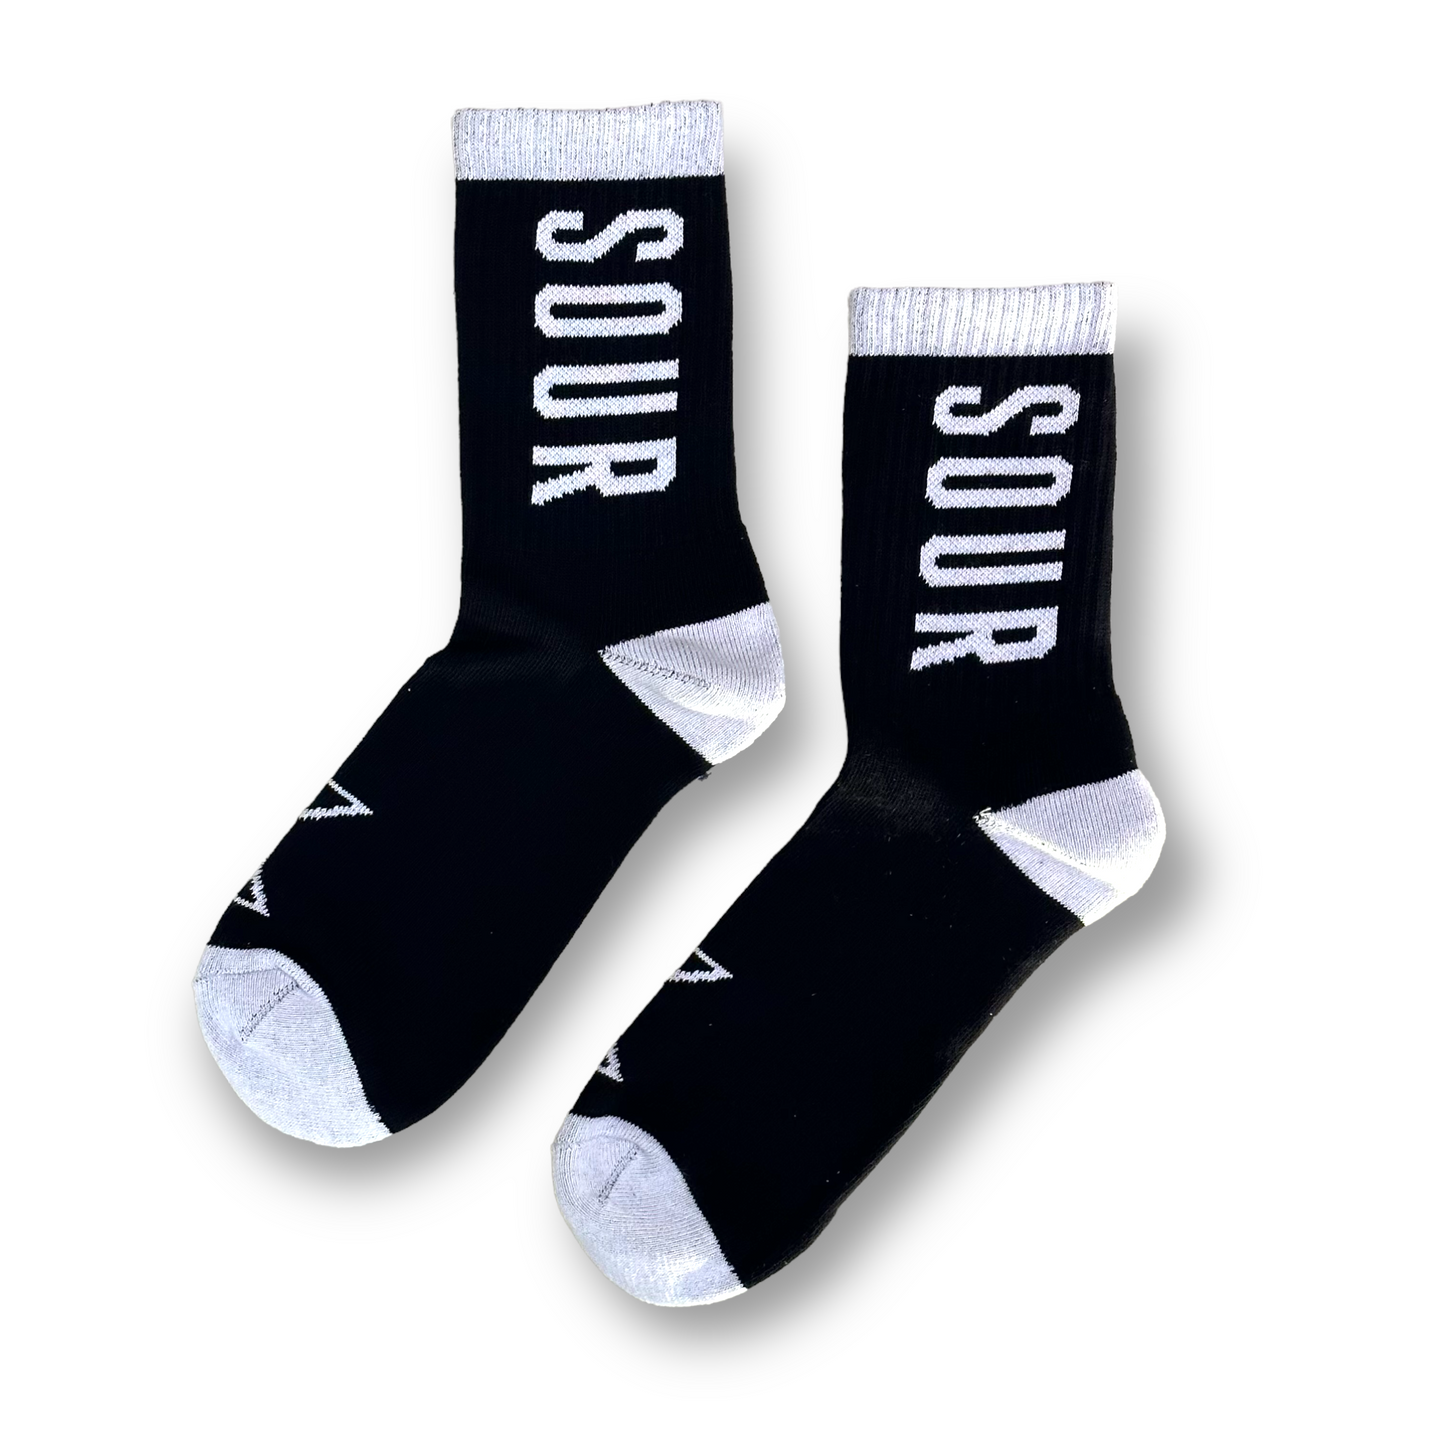 Sour - Sourglass Socks - Black